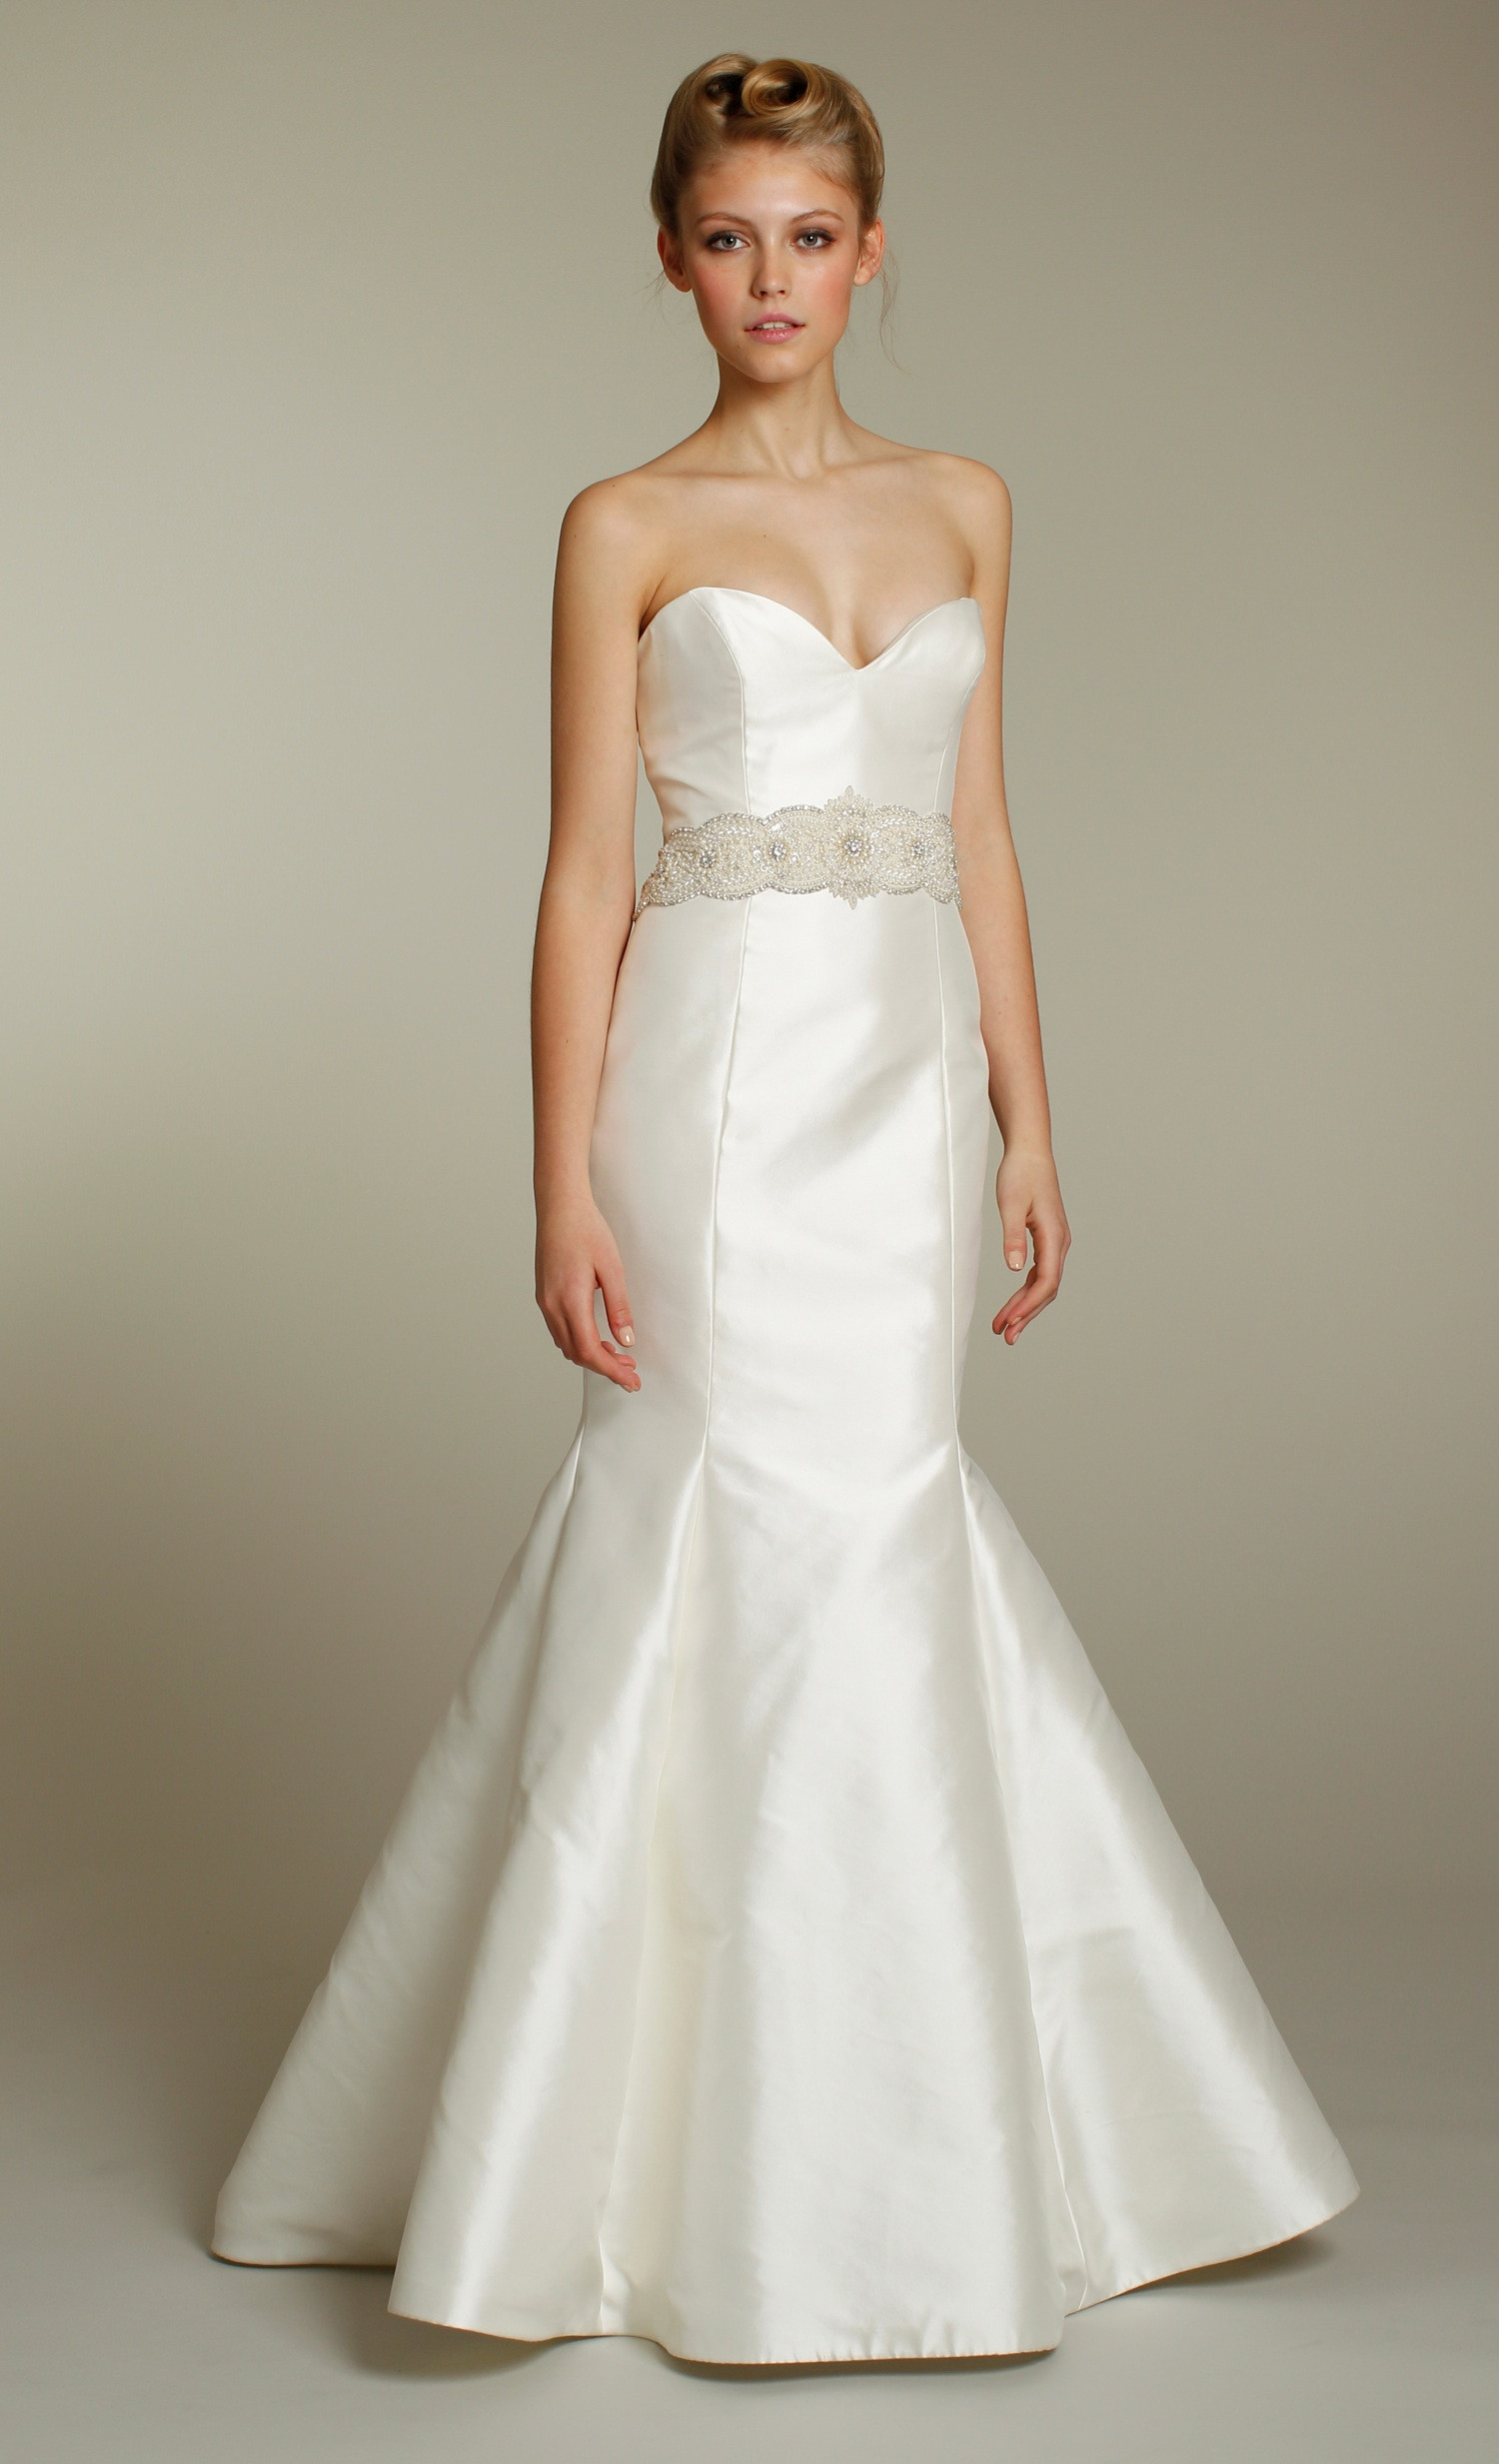 Wedding Gown Sashes
 Sleek ivory sweetheart mermaid wedding dress with